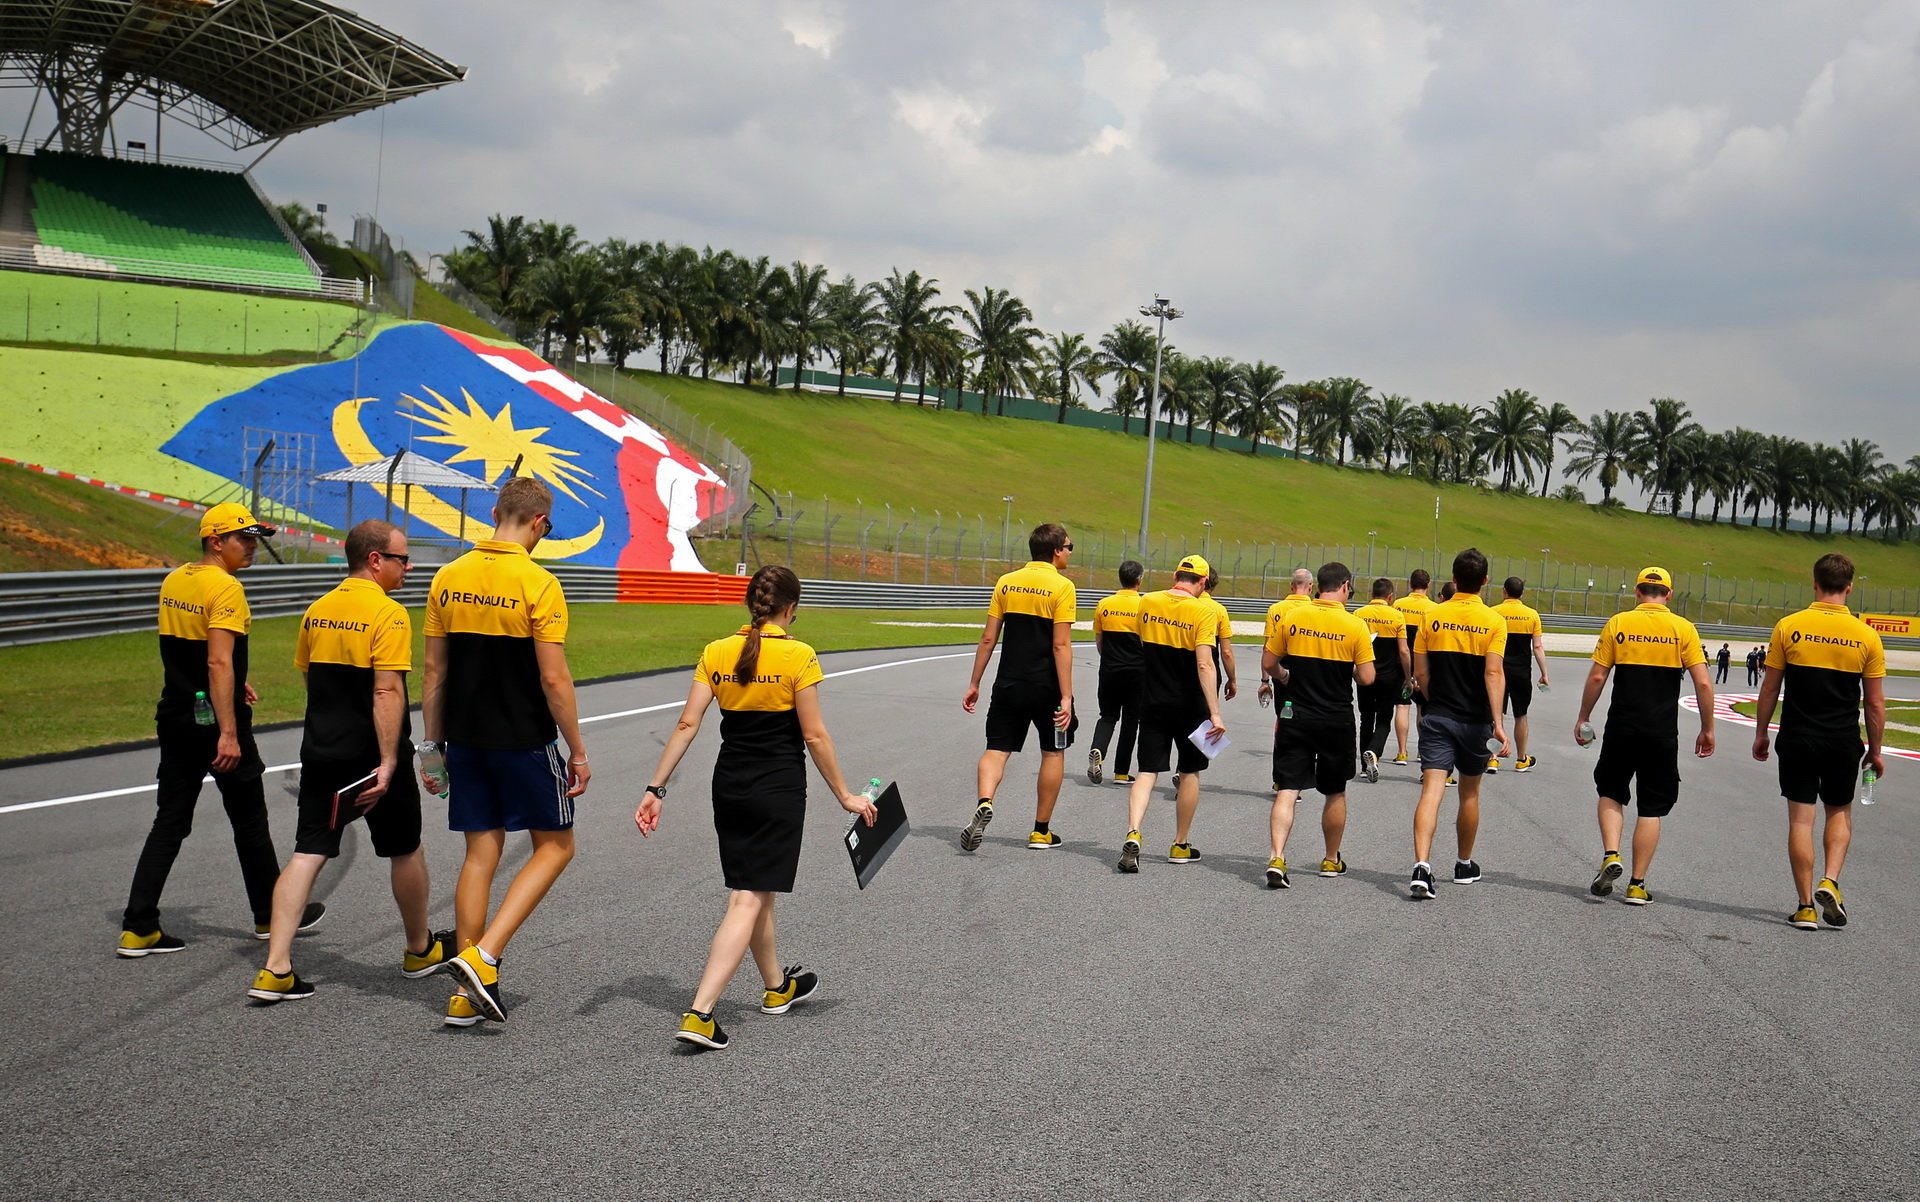 Tým Renault se seznamuje s tratí v Malajsii